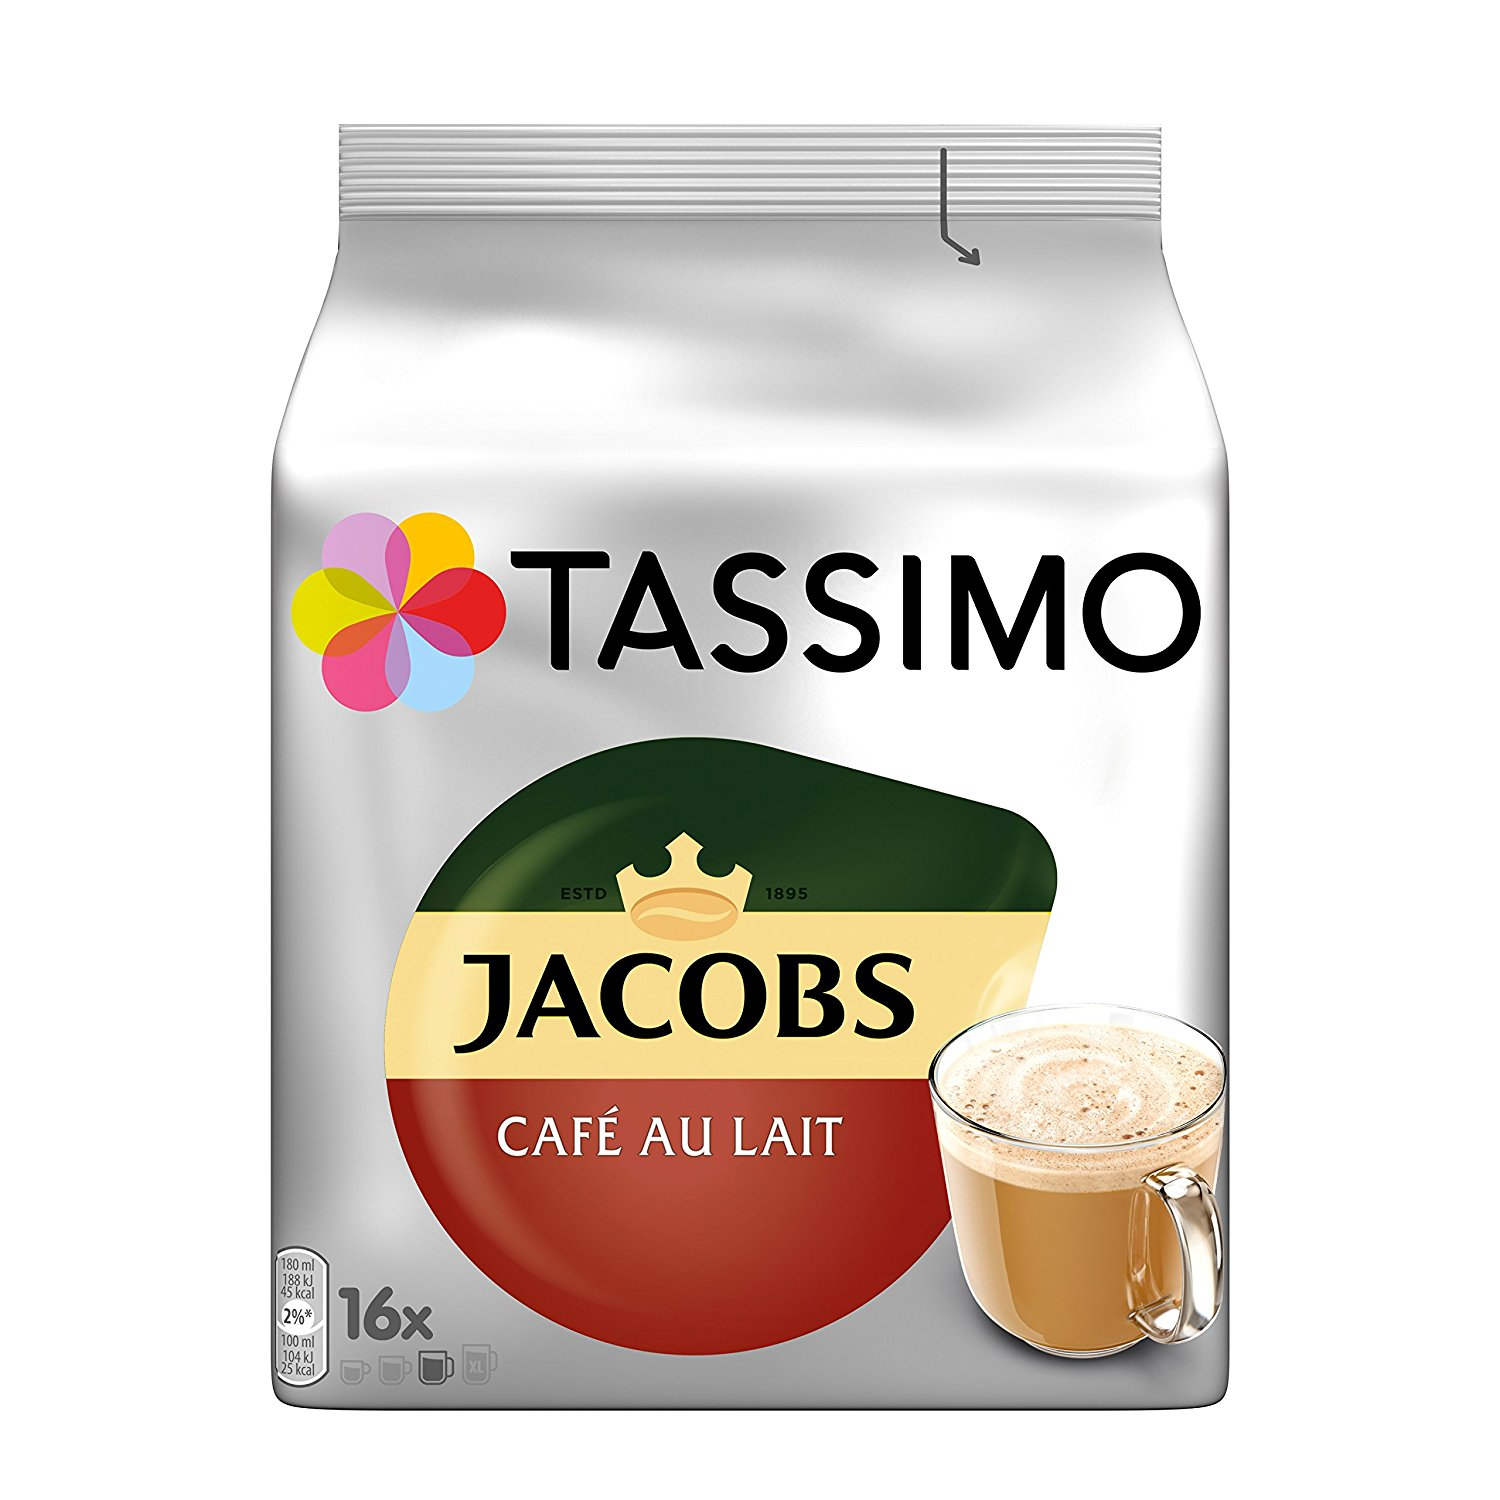 (Tassimo Café Maschine Jacobs 5x16 System)) Discs (T-Disc Lait Kaffeekapseln Au T Getränke TASSIMO